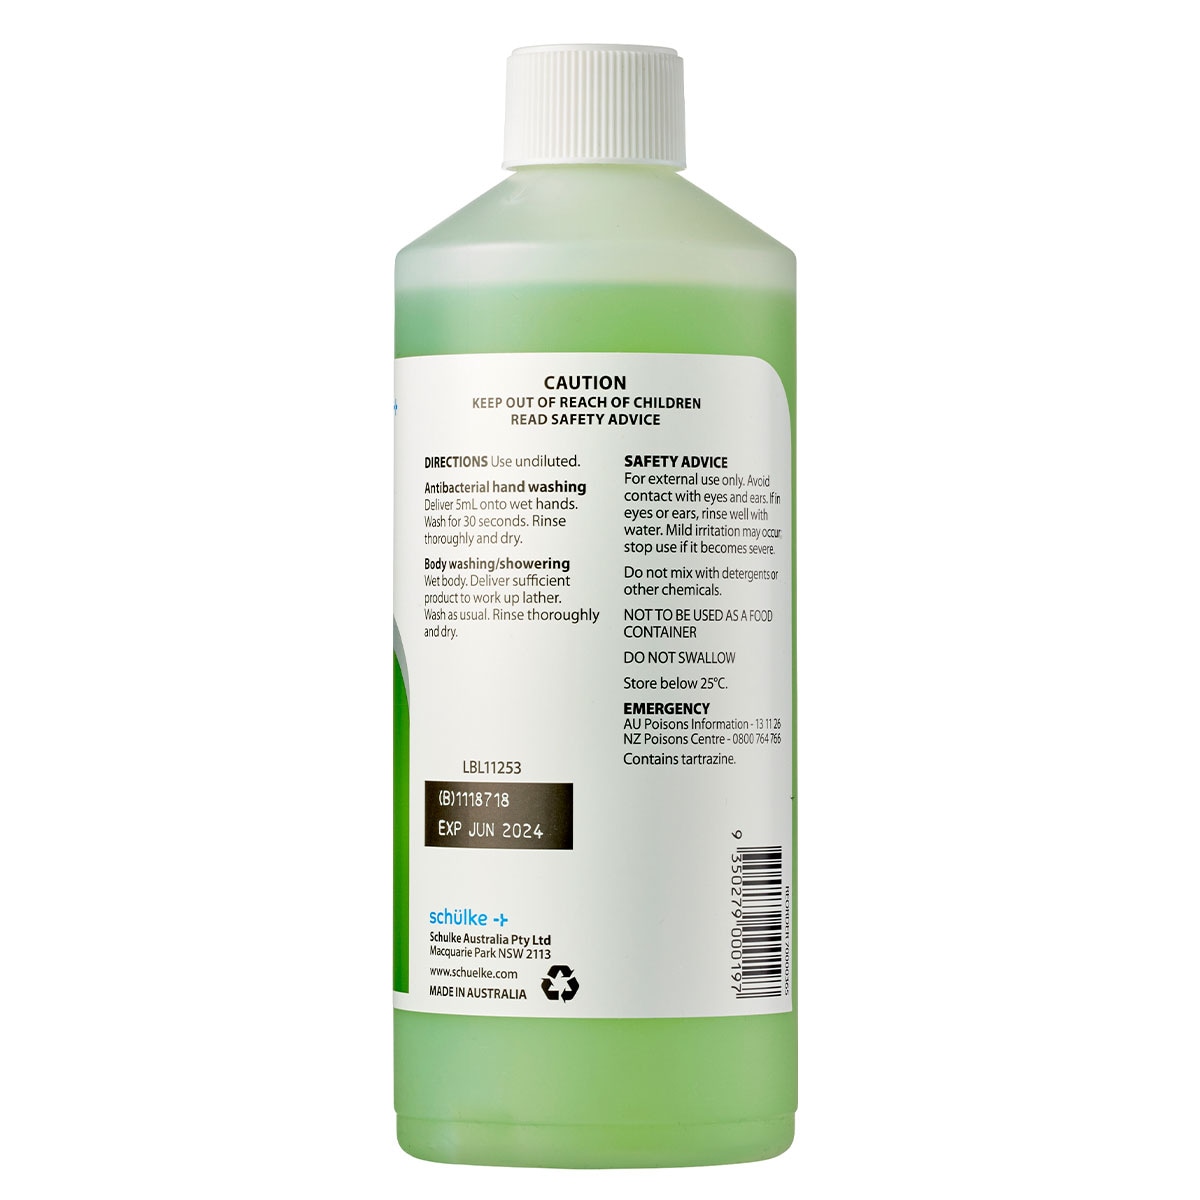 Microshield 2 Chlorhexidine Skin Cleanser 500ml